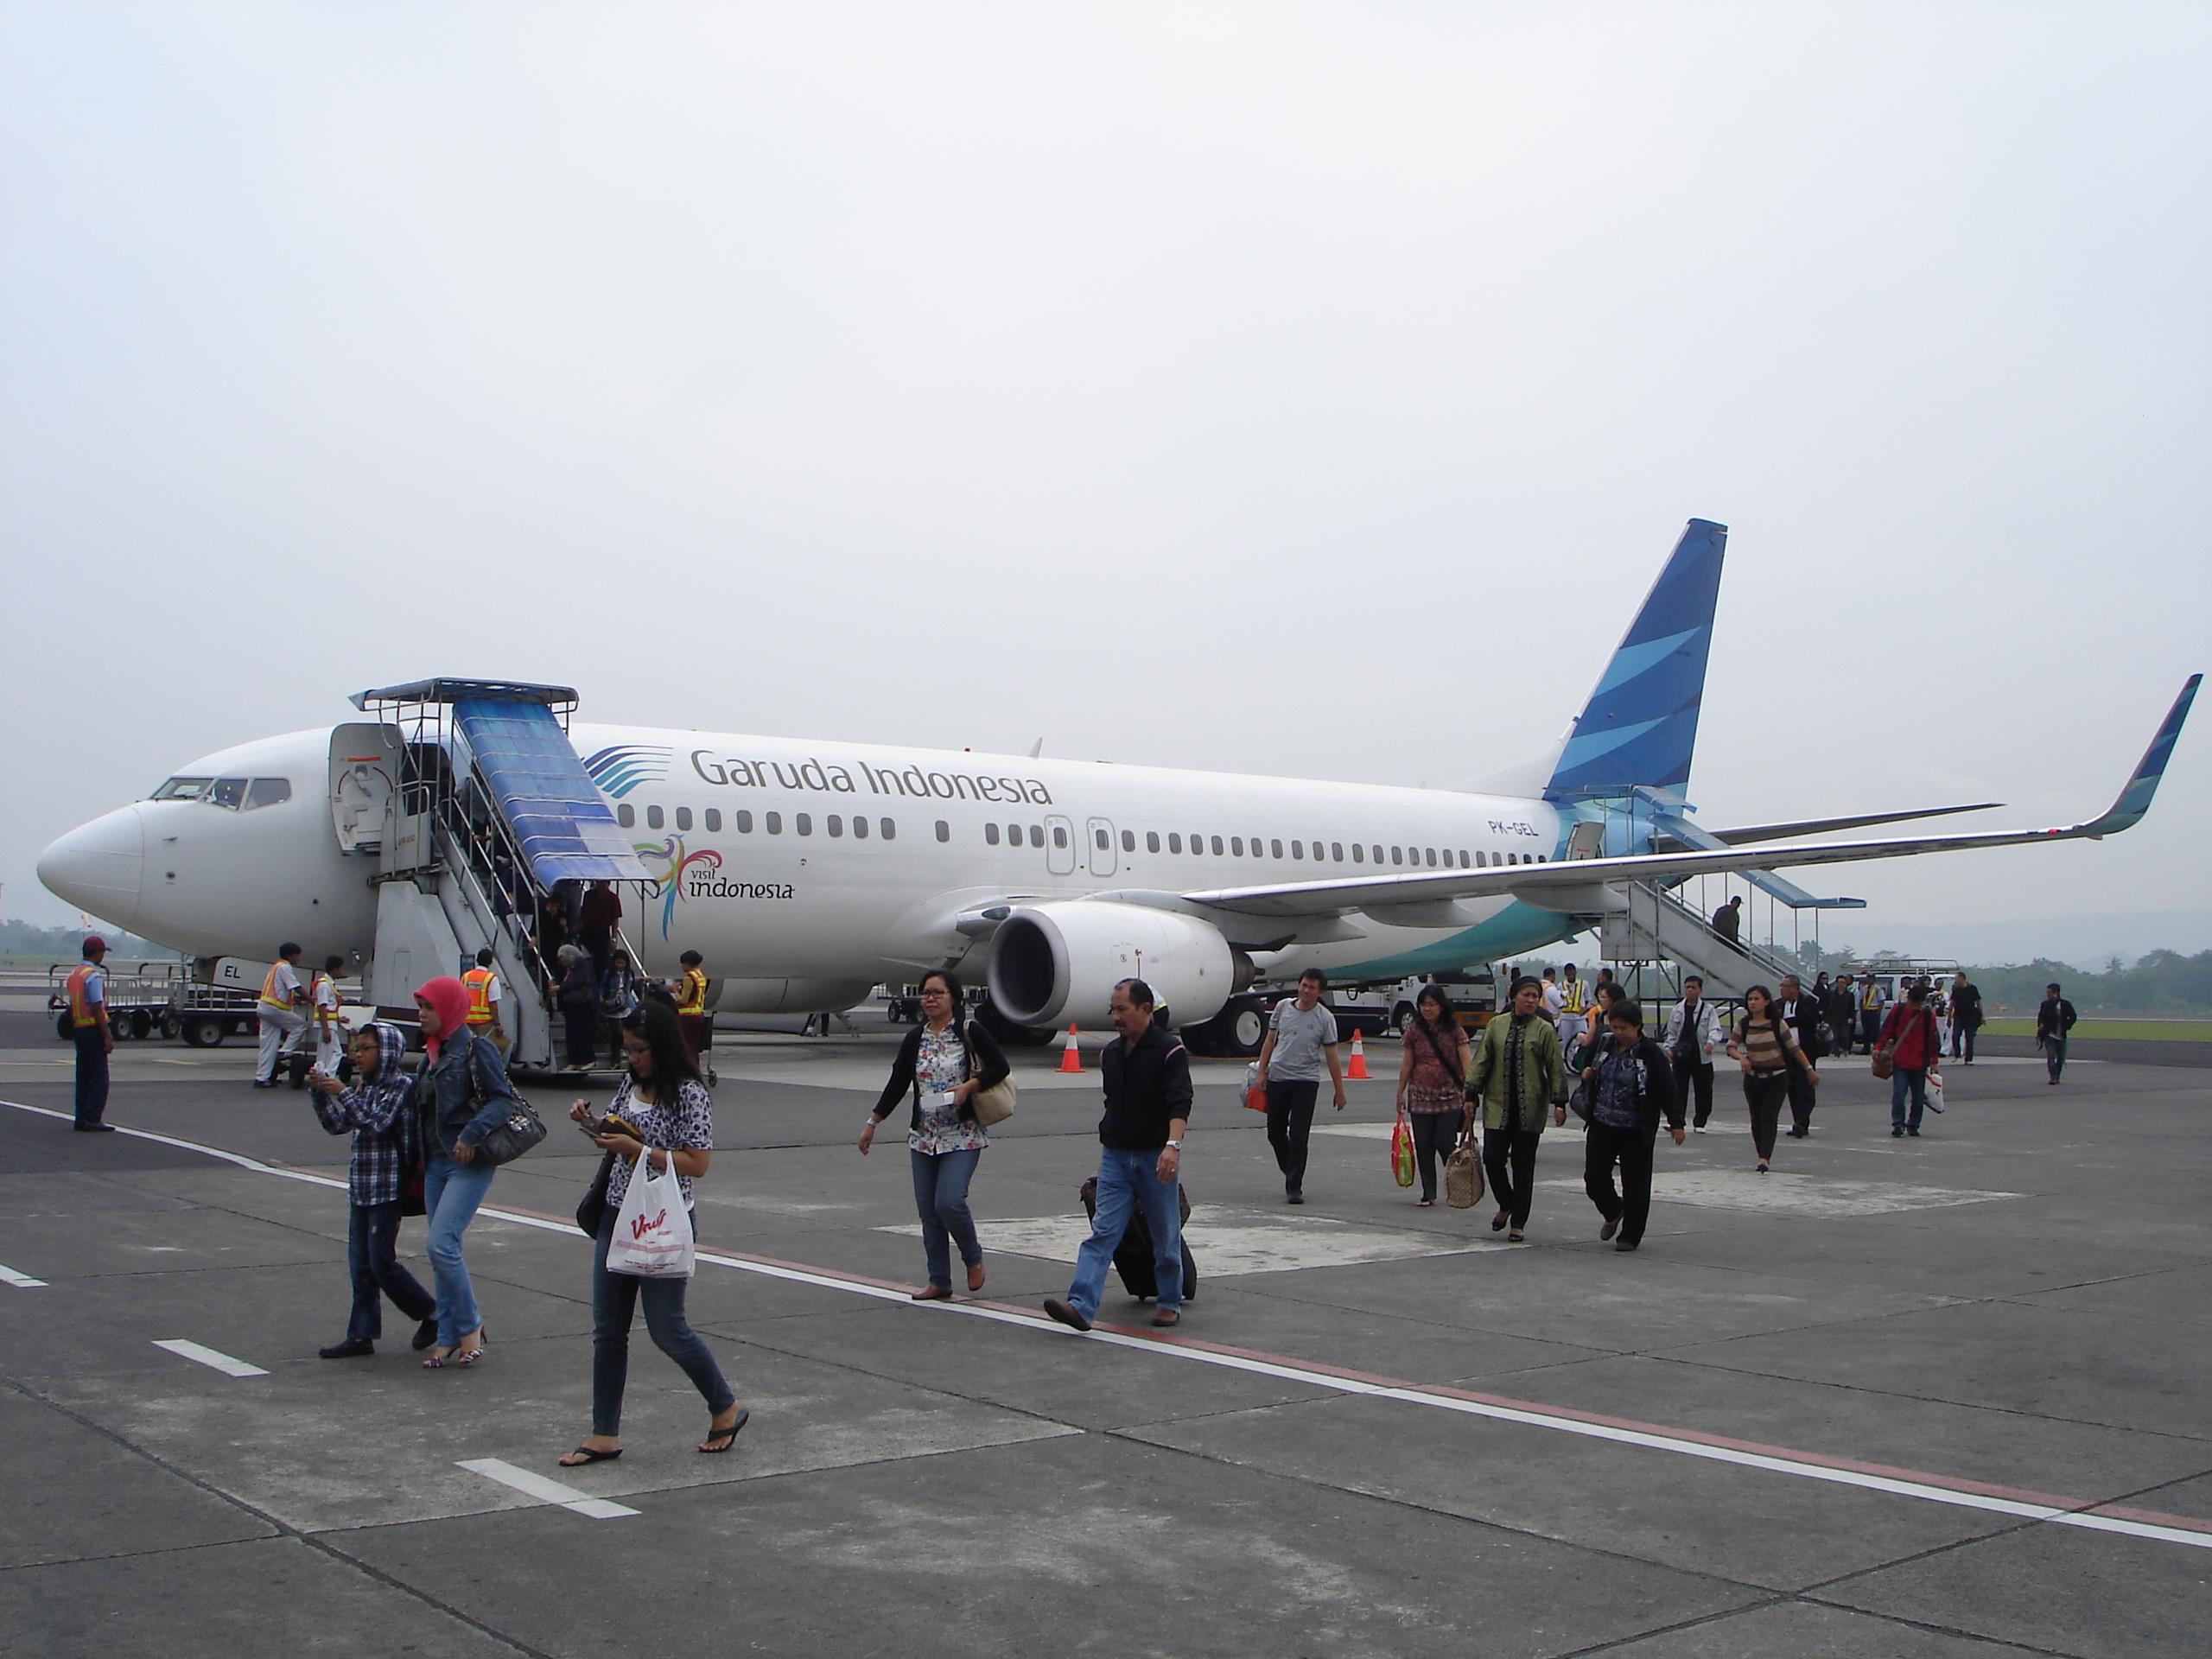 Garuda Indonesia aeroplane landed at Jakarta Soekarno-Hatta Airport.